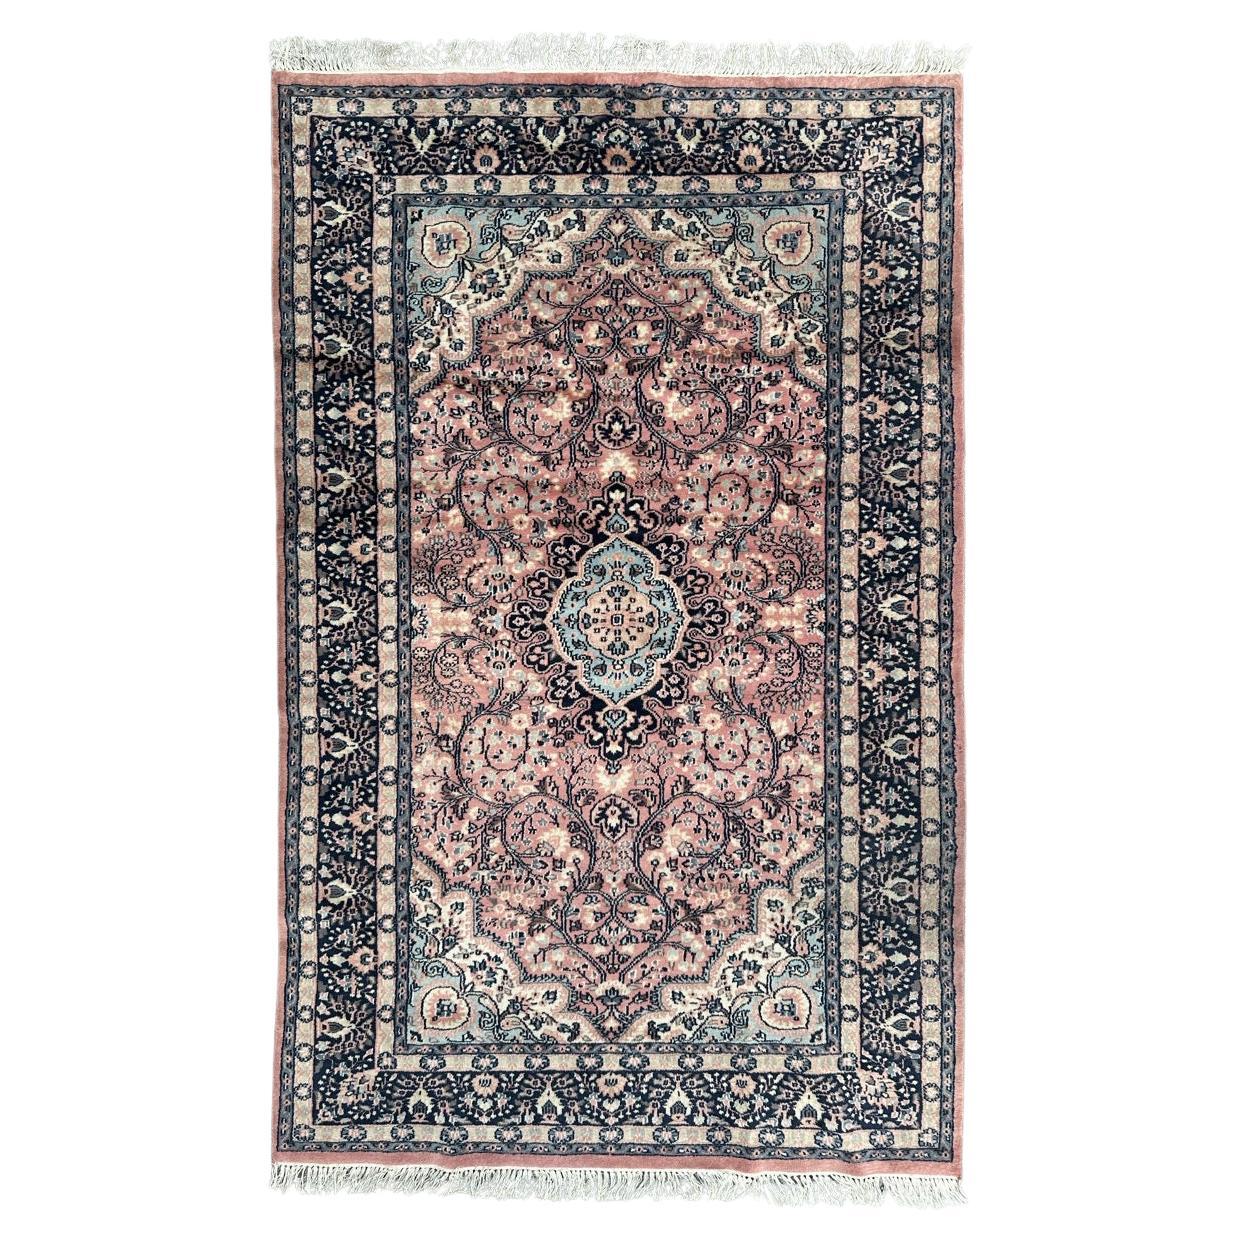 Bobyrug’s pretty vintage Pakistani rug 